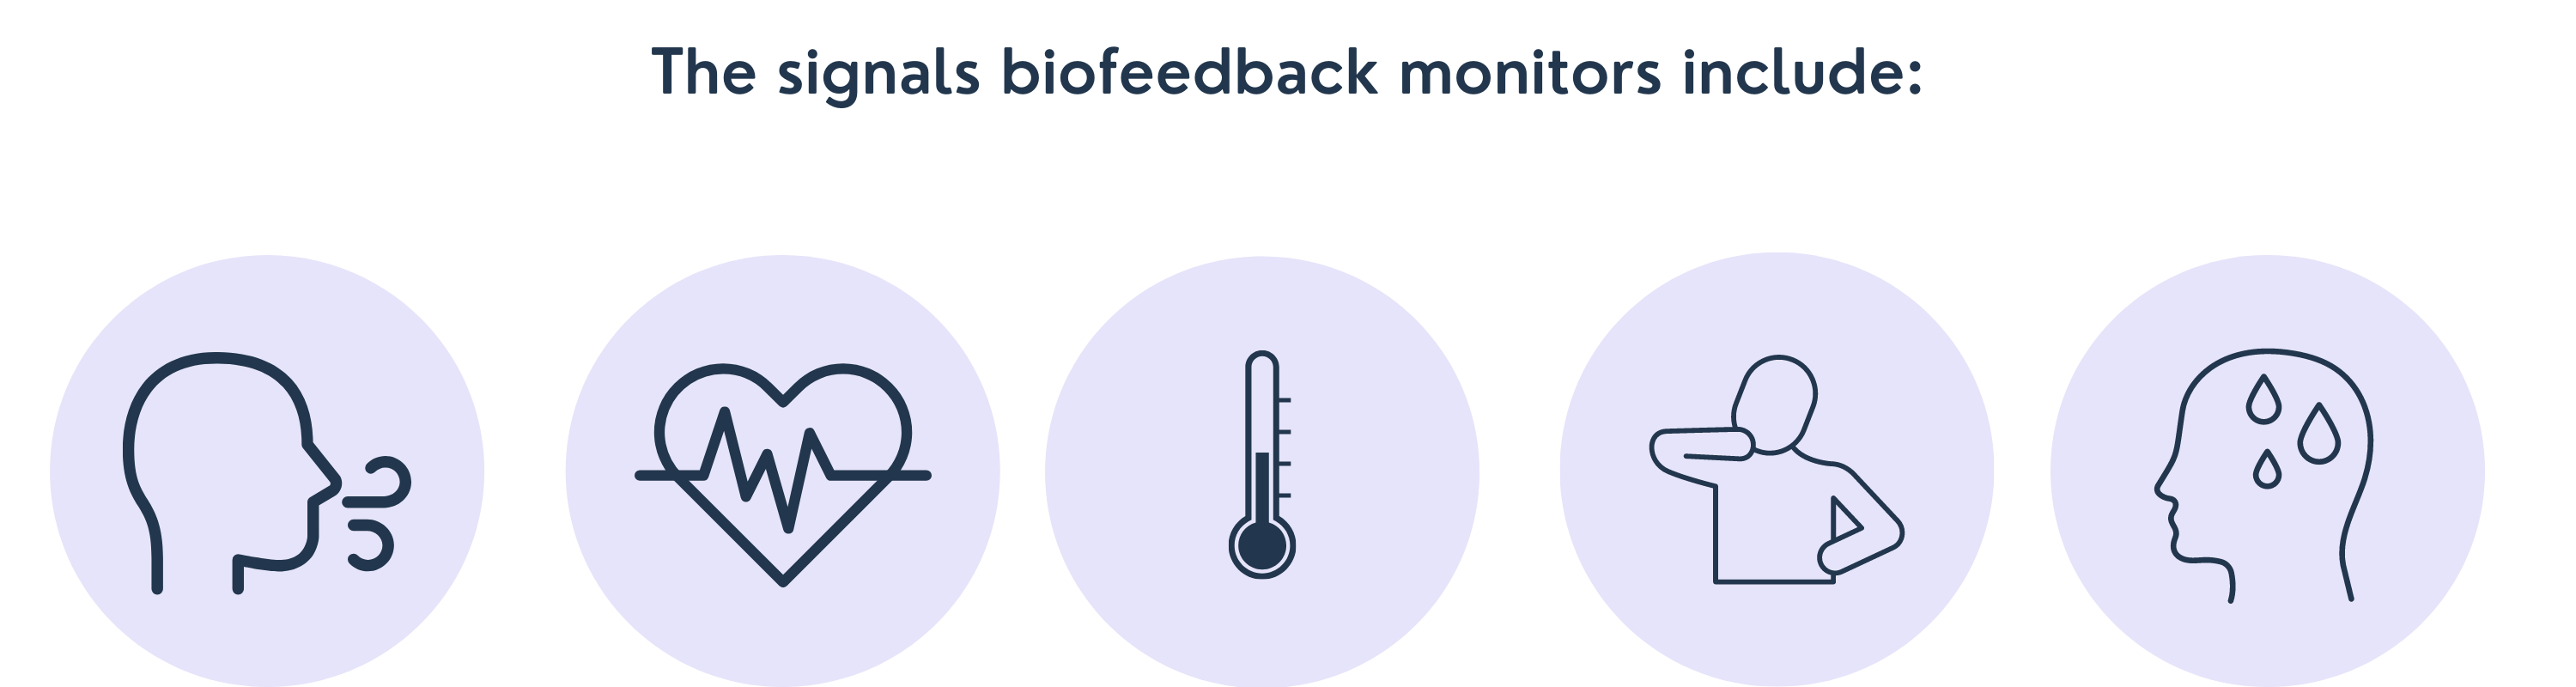 Types of biofeedback signal monitors.